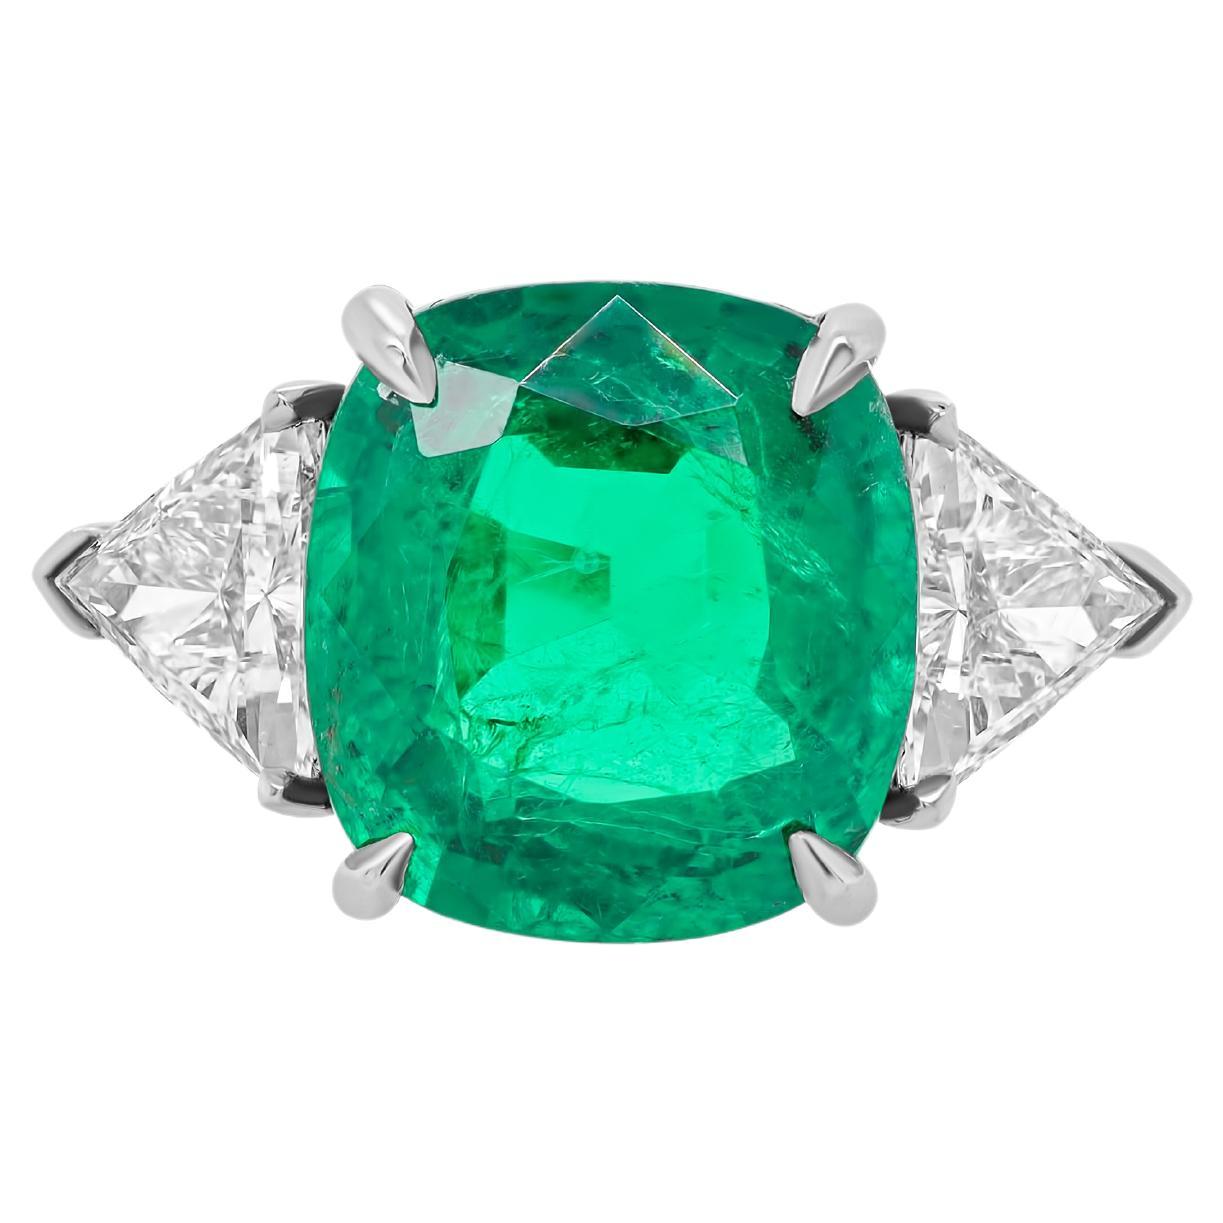 Diana M. Platinum emerald diamond ring featuring a 7.70 ct cushion cut 